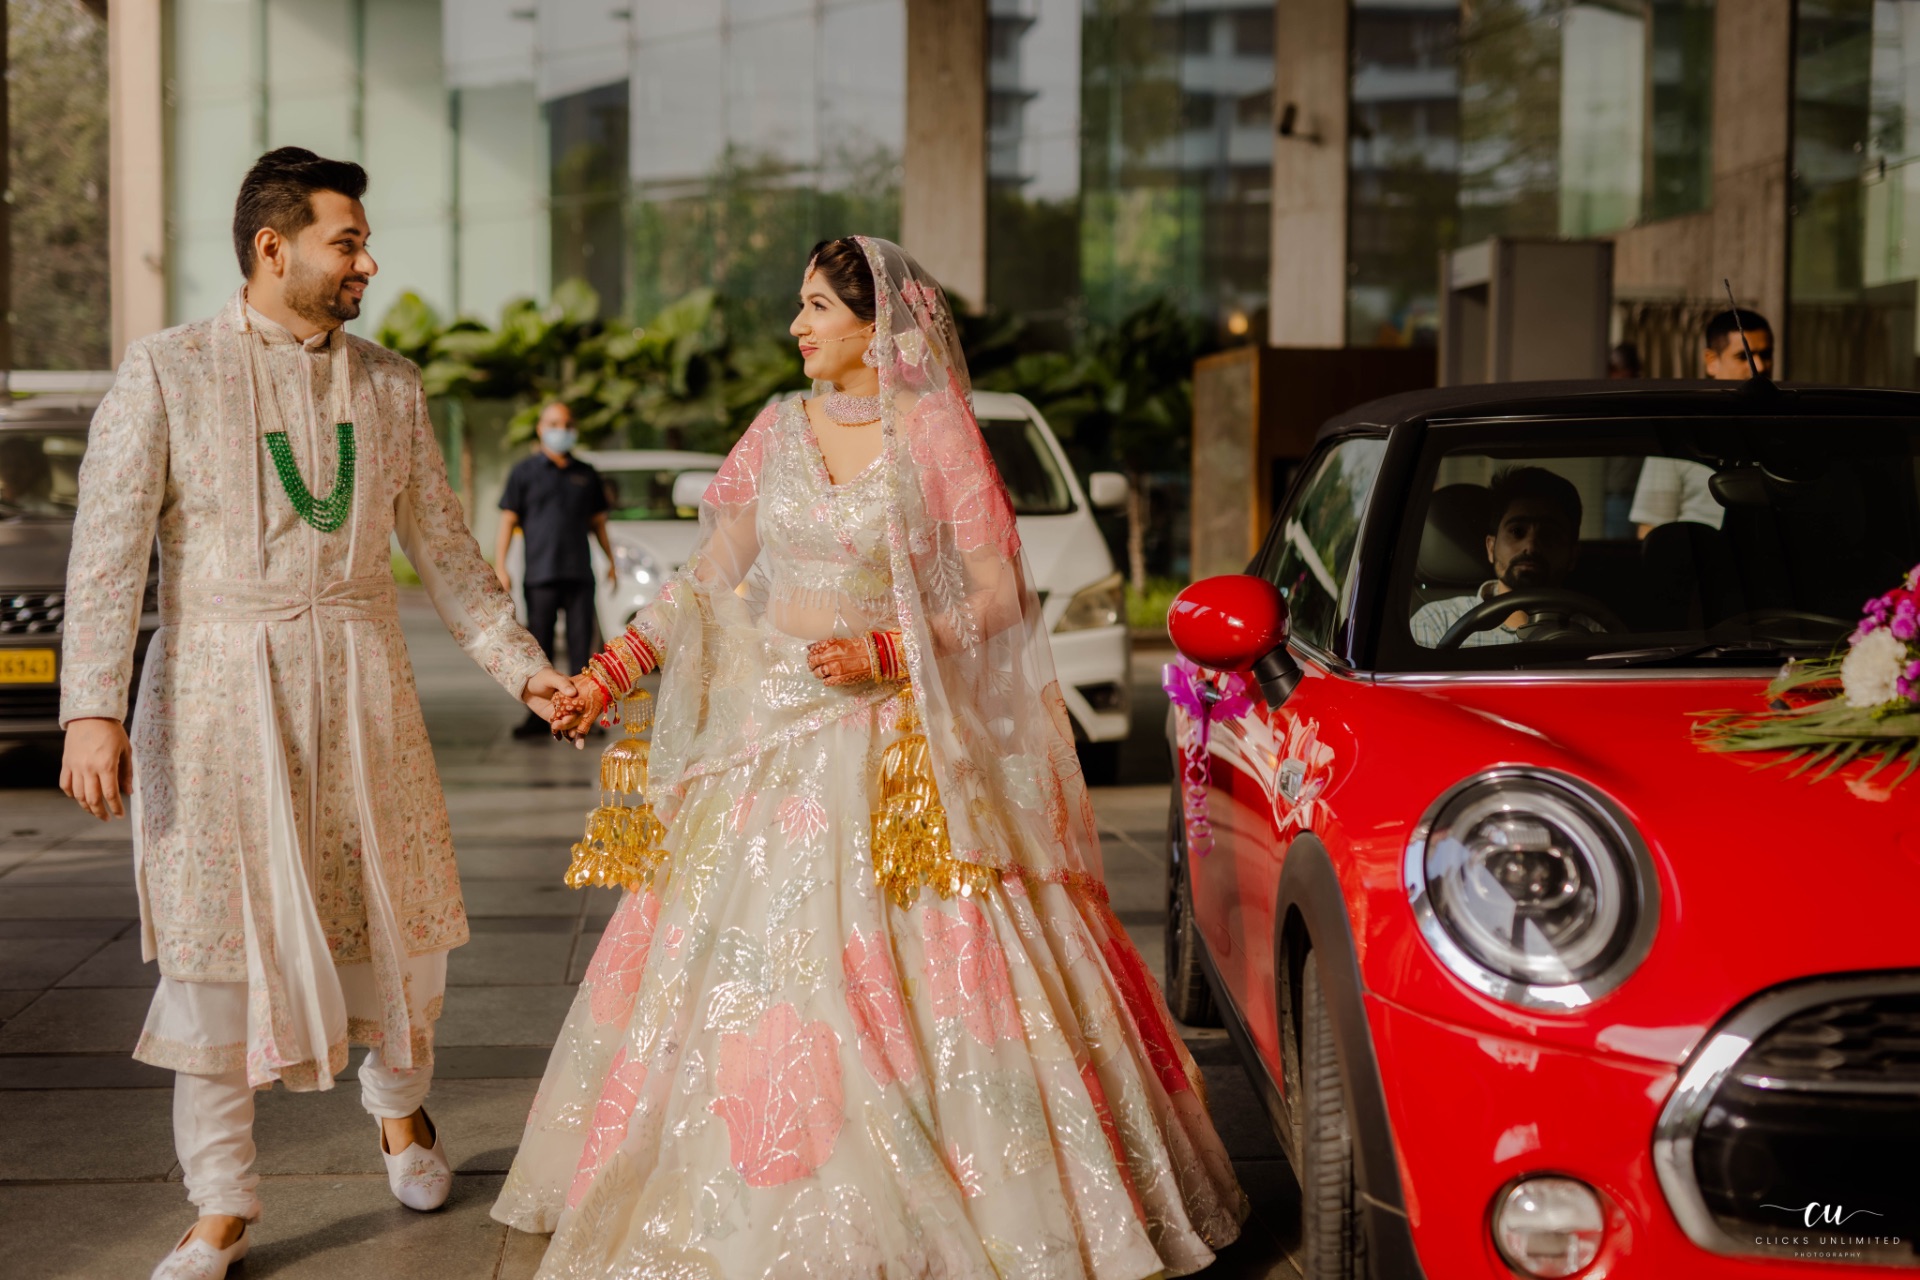 Komal & Vijay’s Wedding Celebration & Anand Karaj Was A Dreamy Affair!